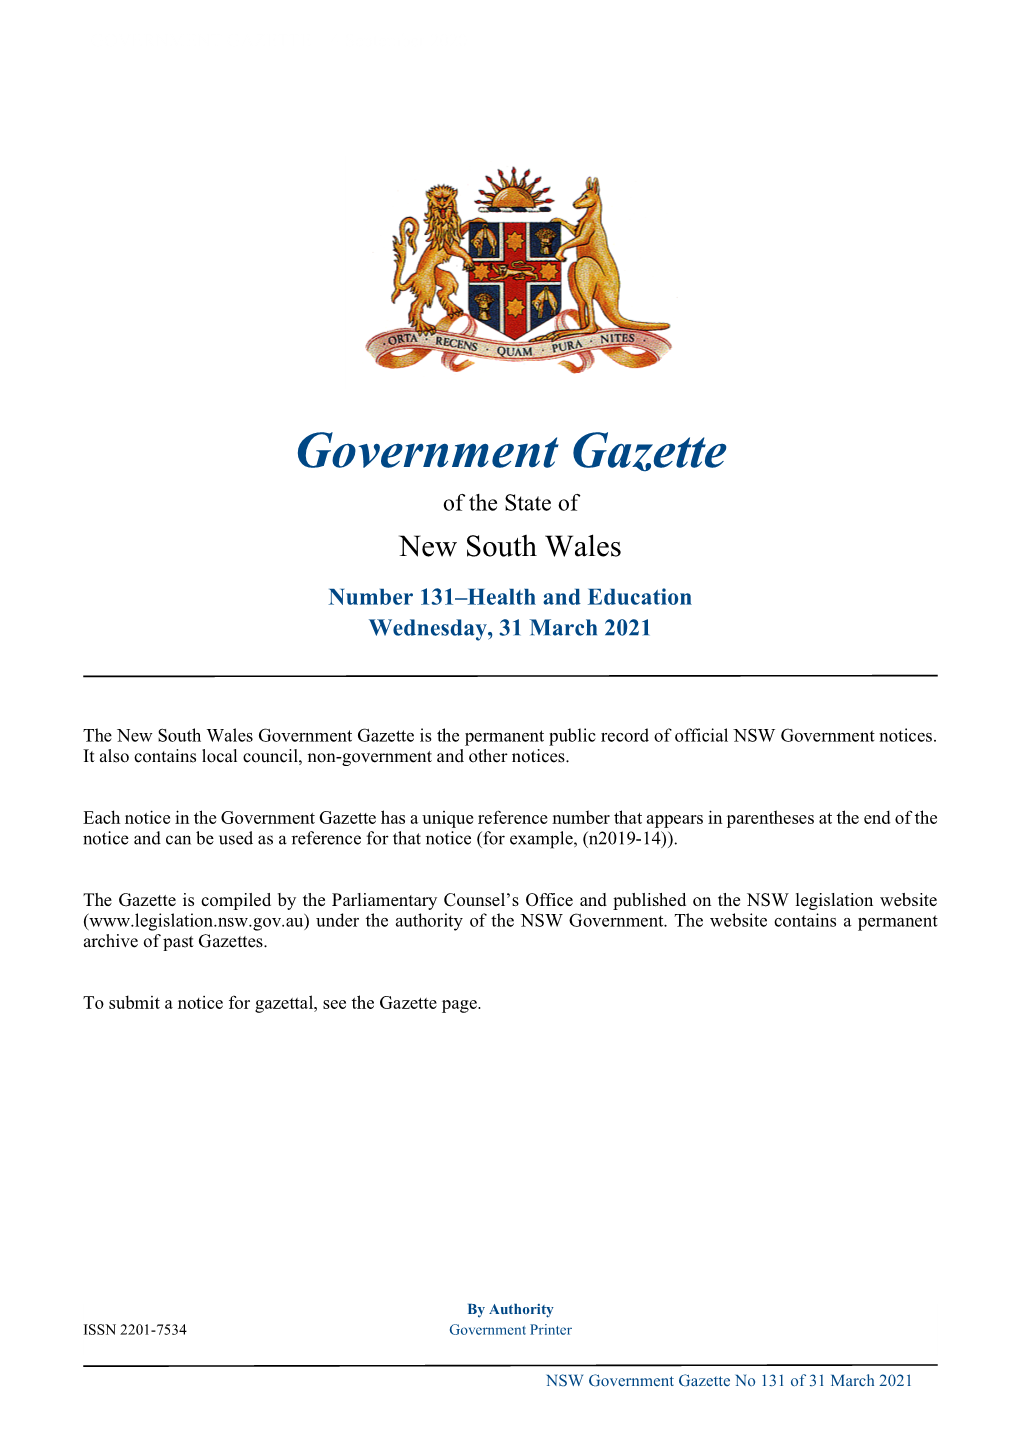 Government Gazette No 131 of Wednesday 31 March 2021